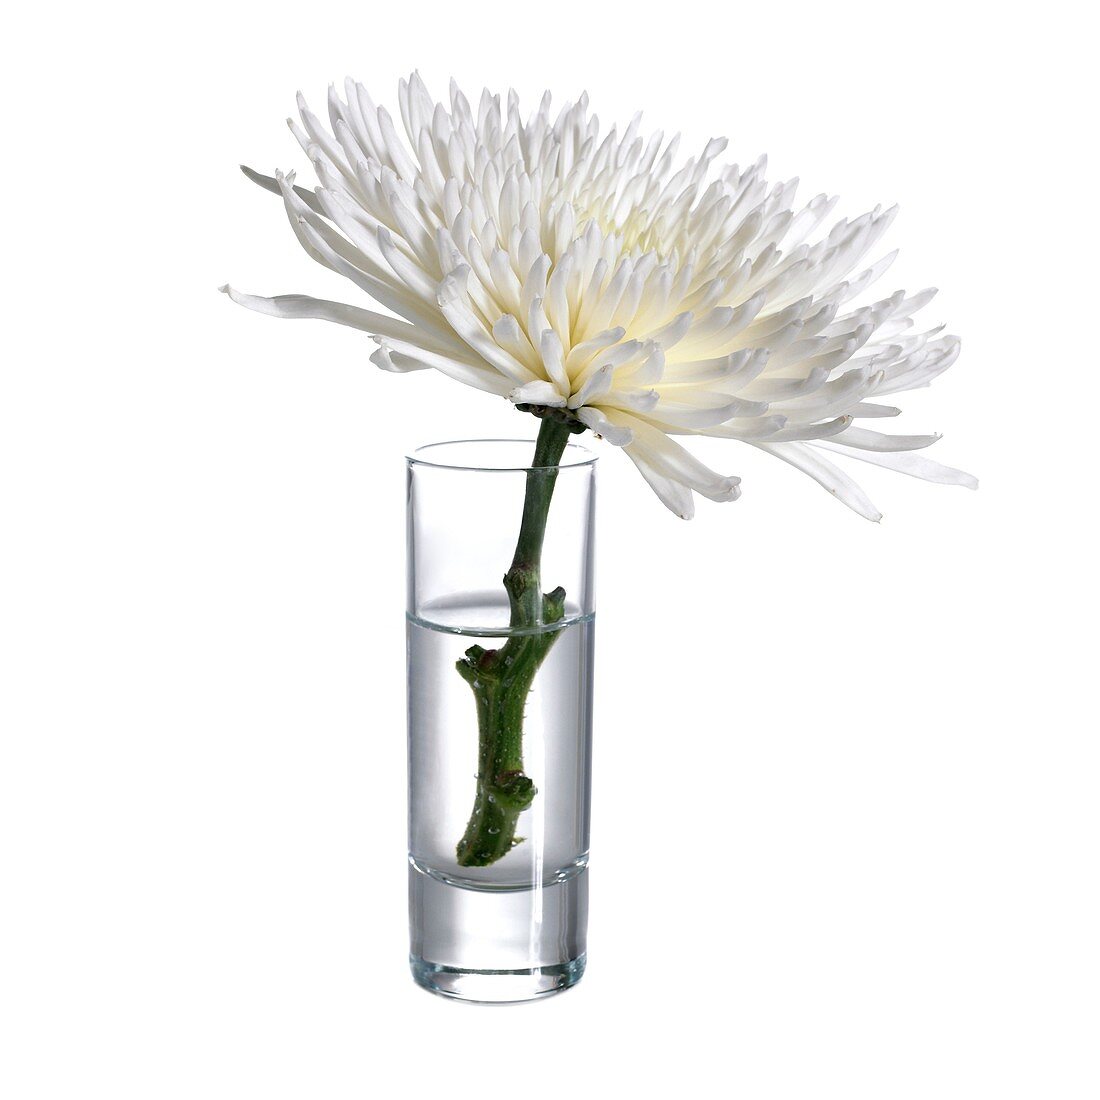 White chrysanthemum flower in water